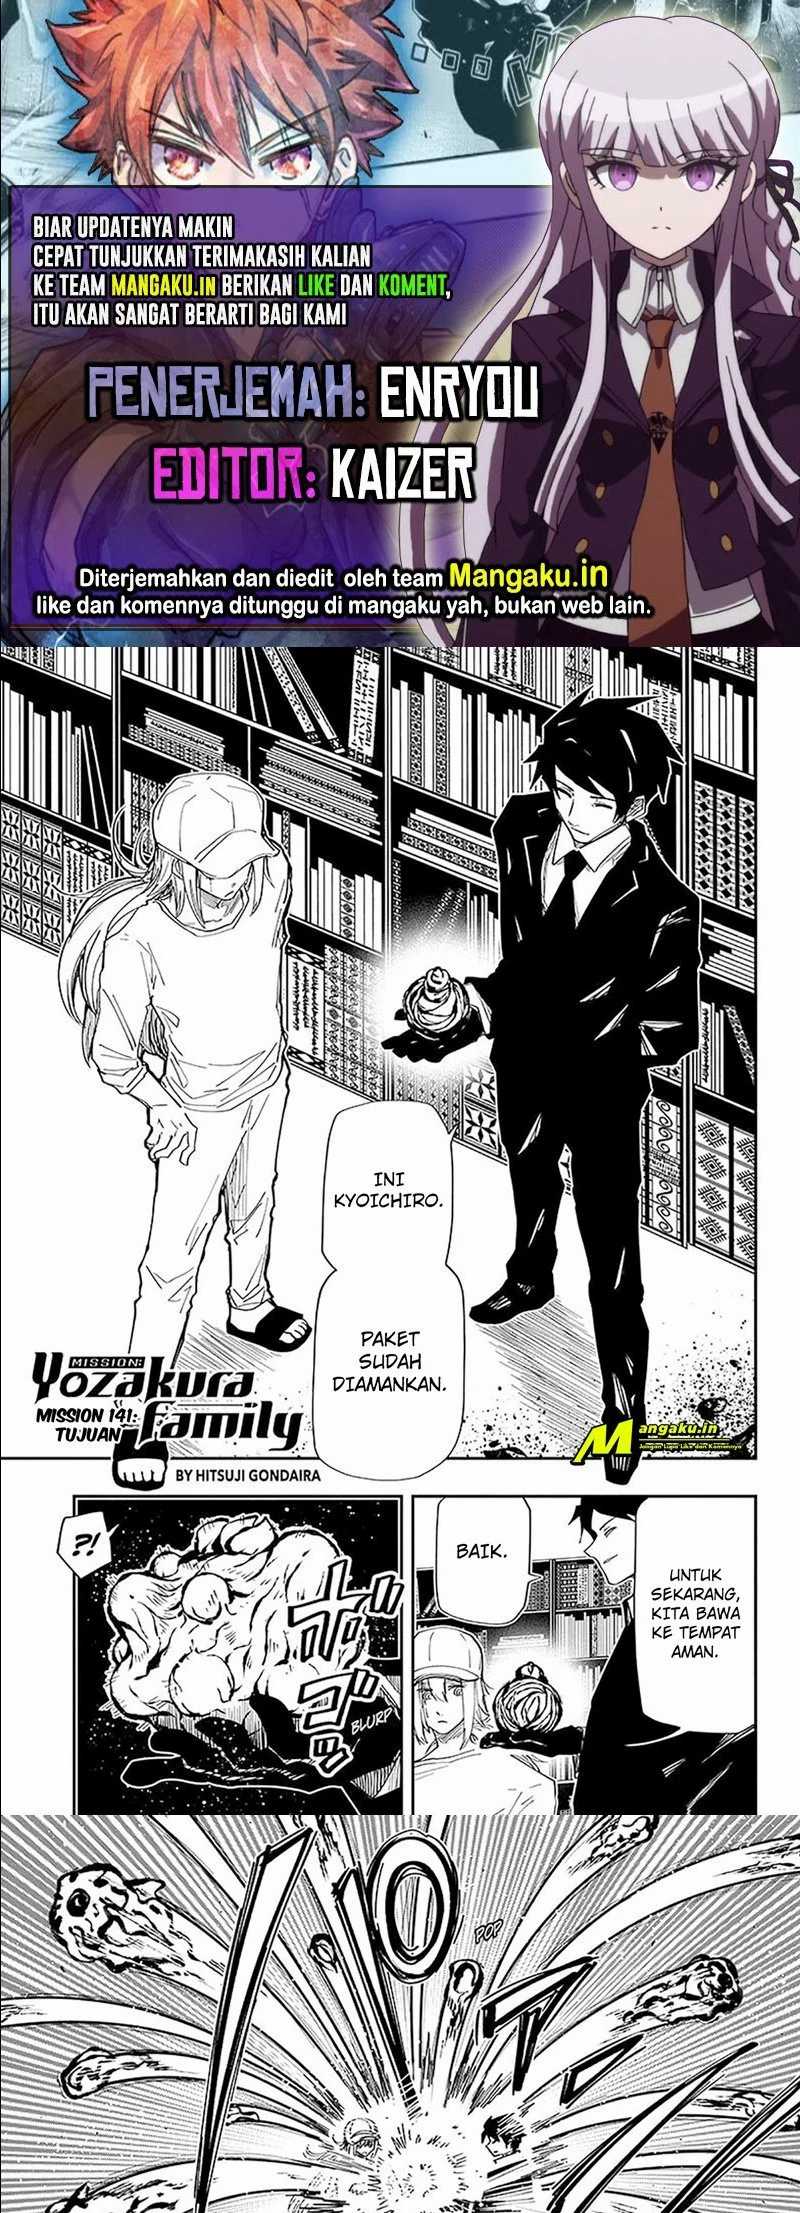 Mission: Yozakura Family: Chapter 141 - Page 1